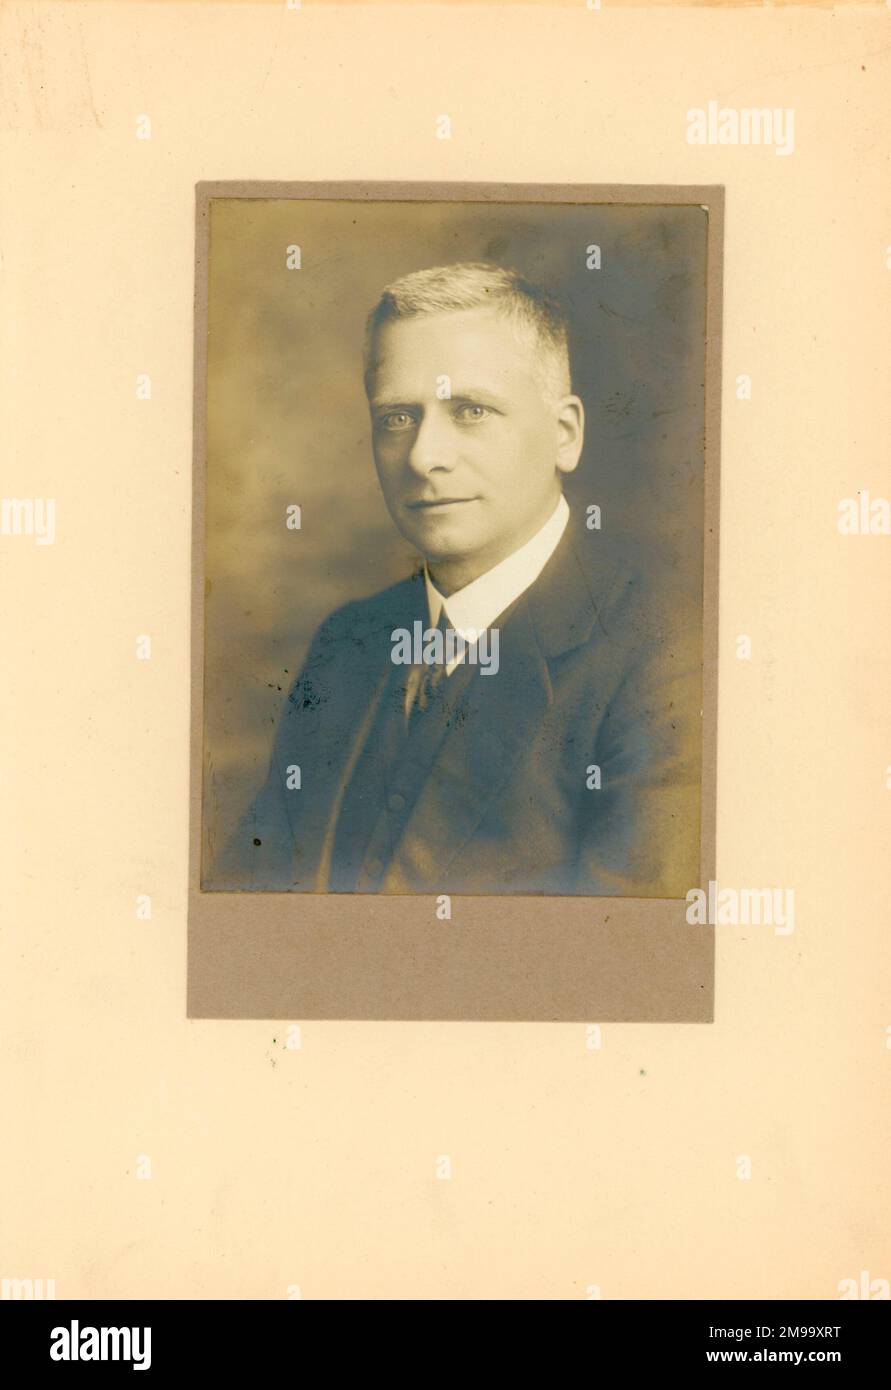 IAE President, 1918-19, Alfred Arnold Remington. Stock Photo